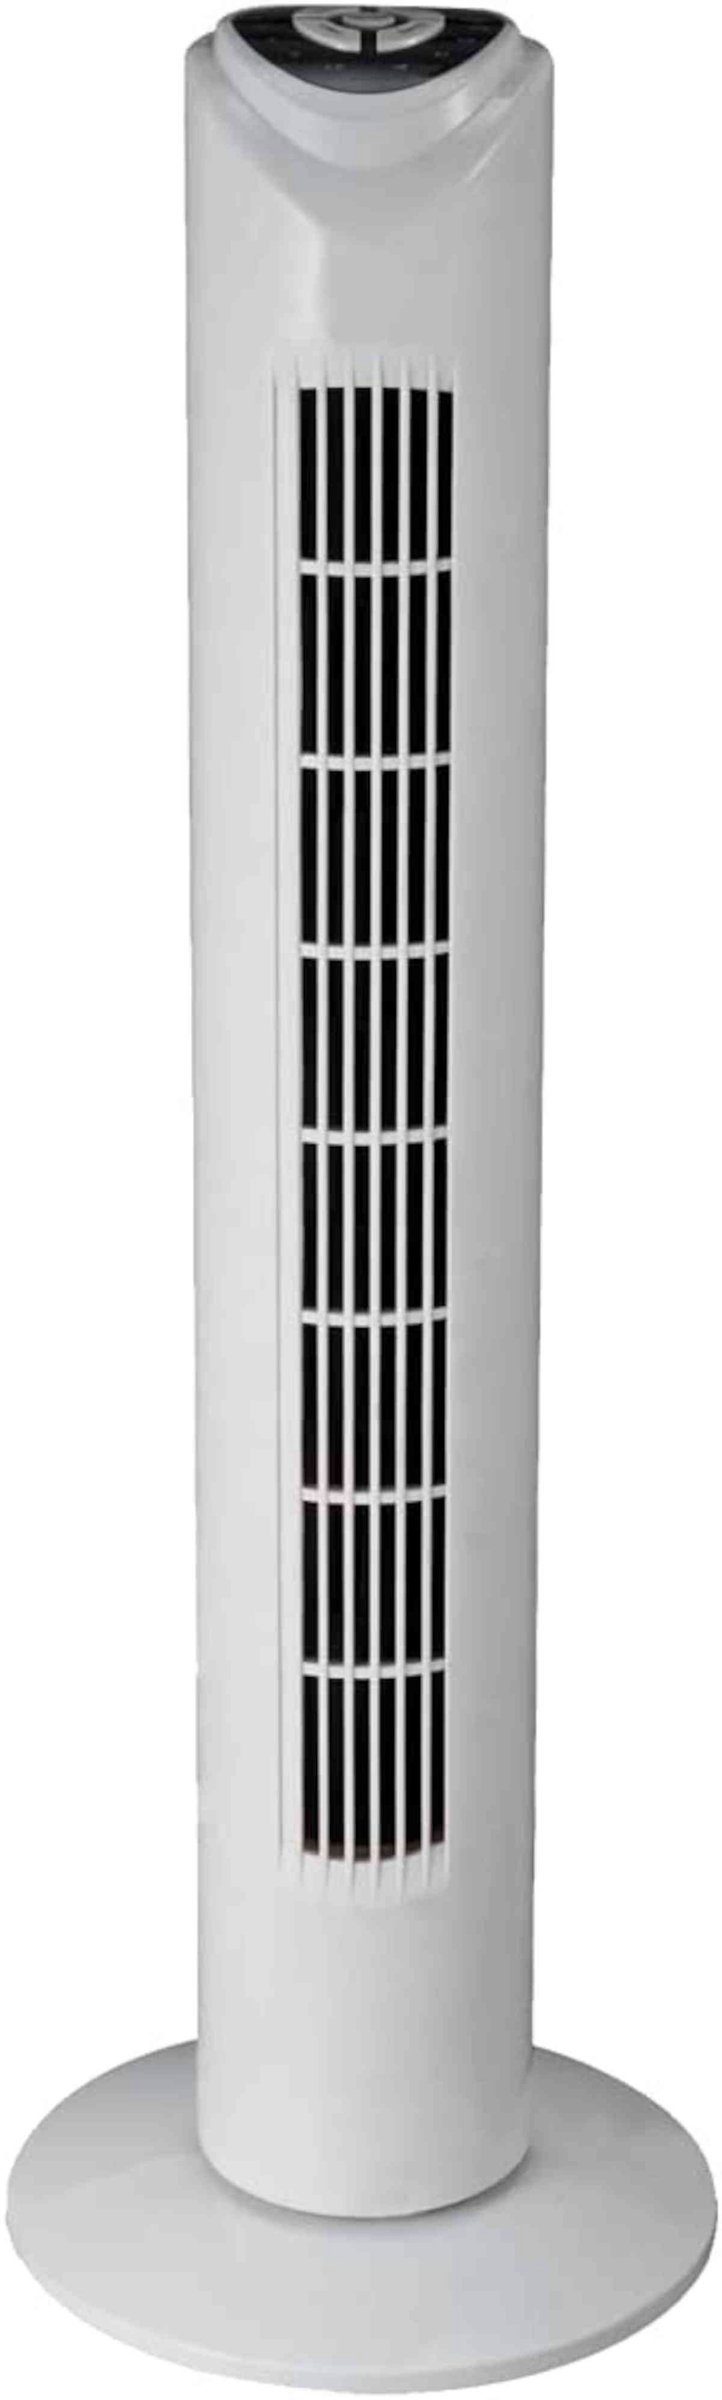 MELISSA Turmventilator 16510108 mit Fernbedienung Turm-Ventilator